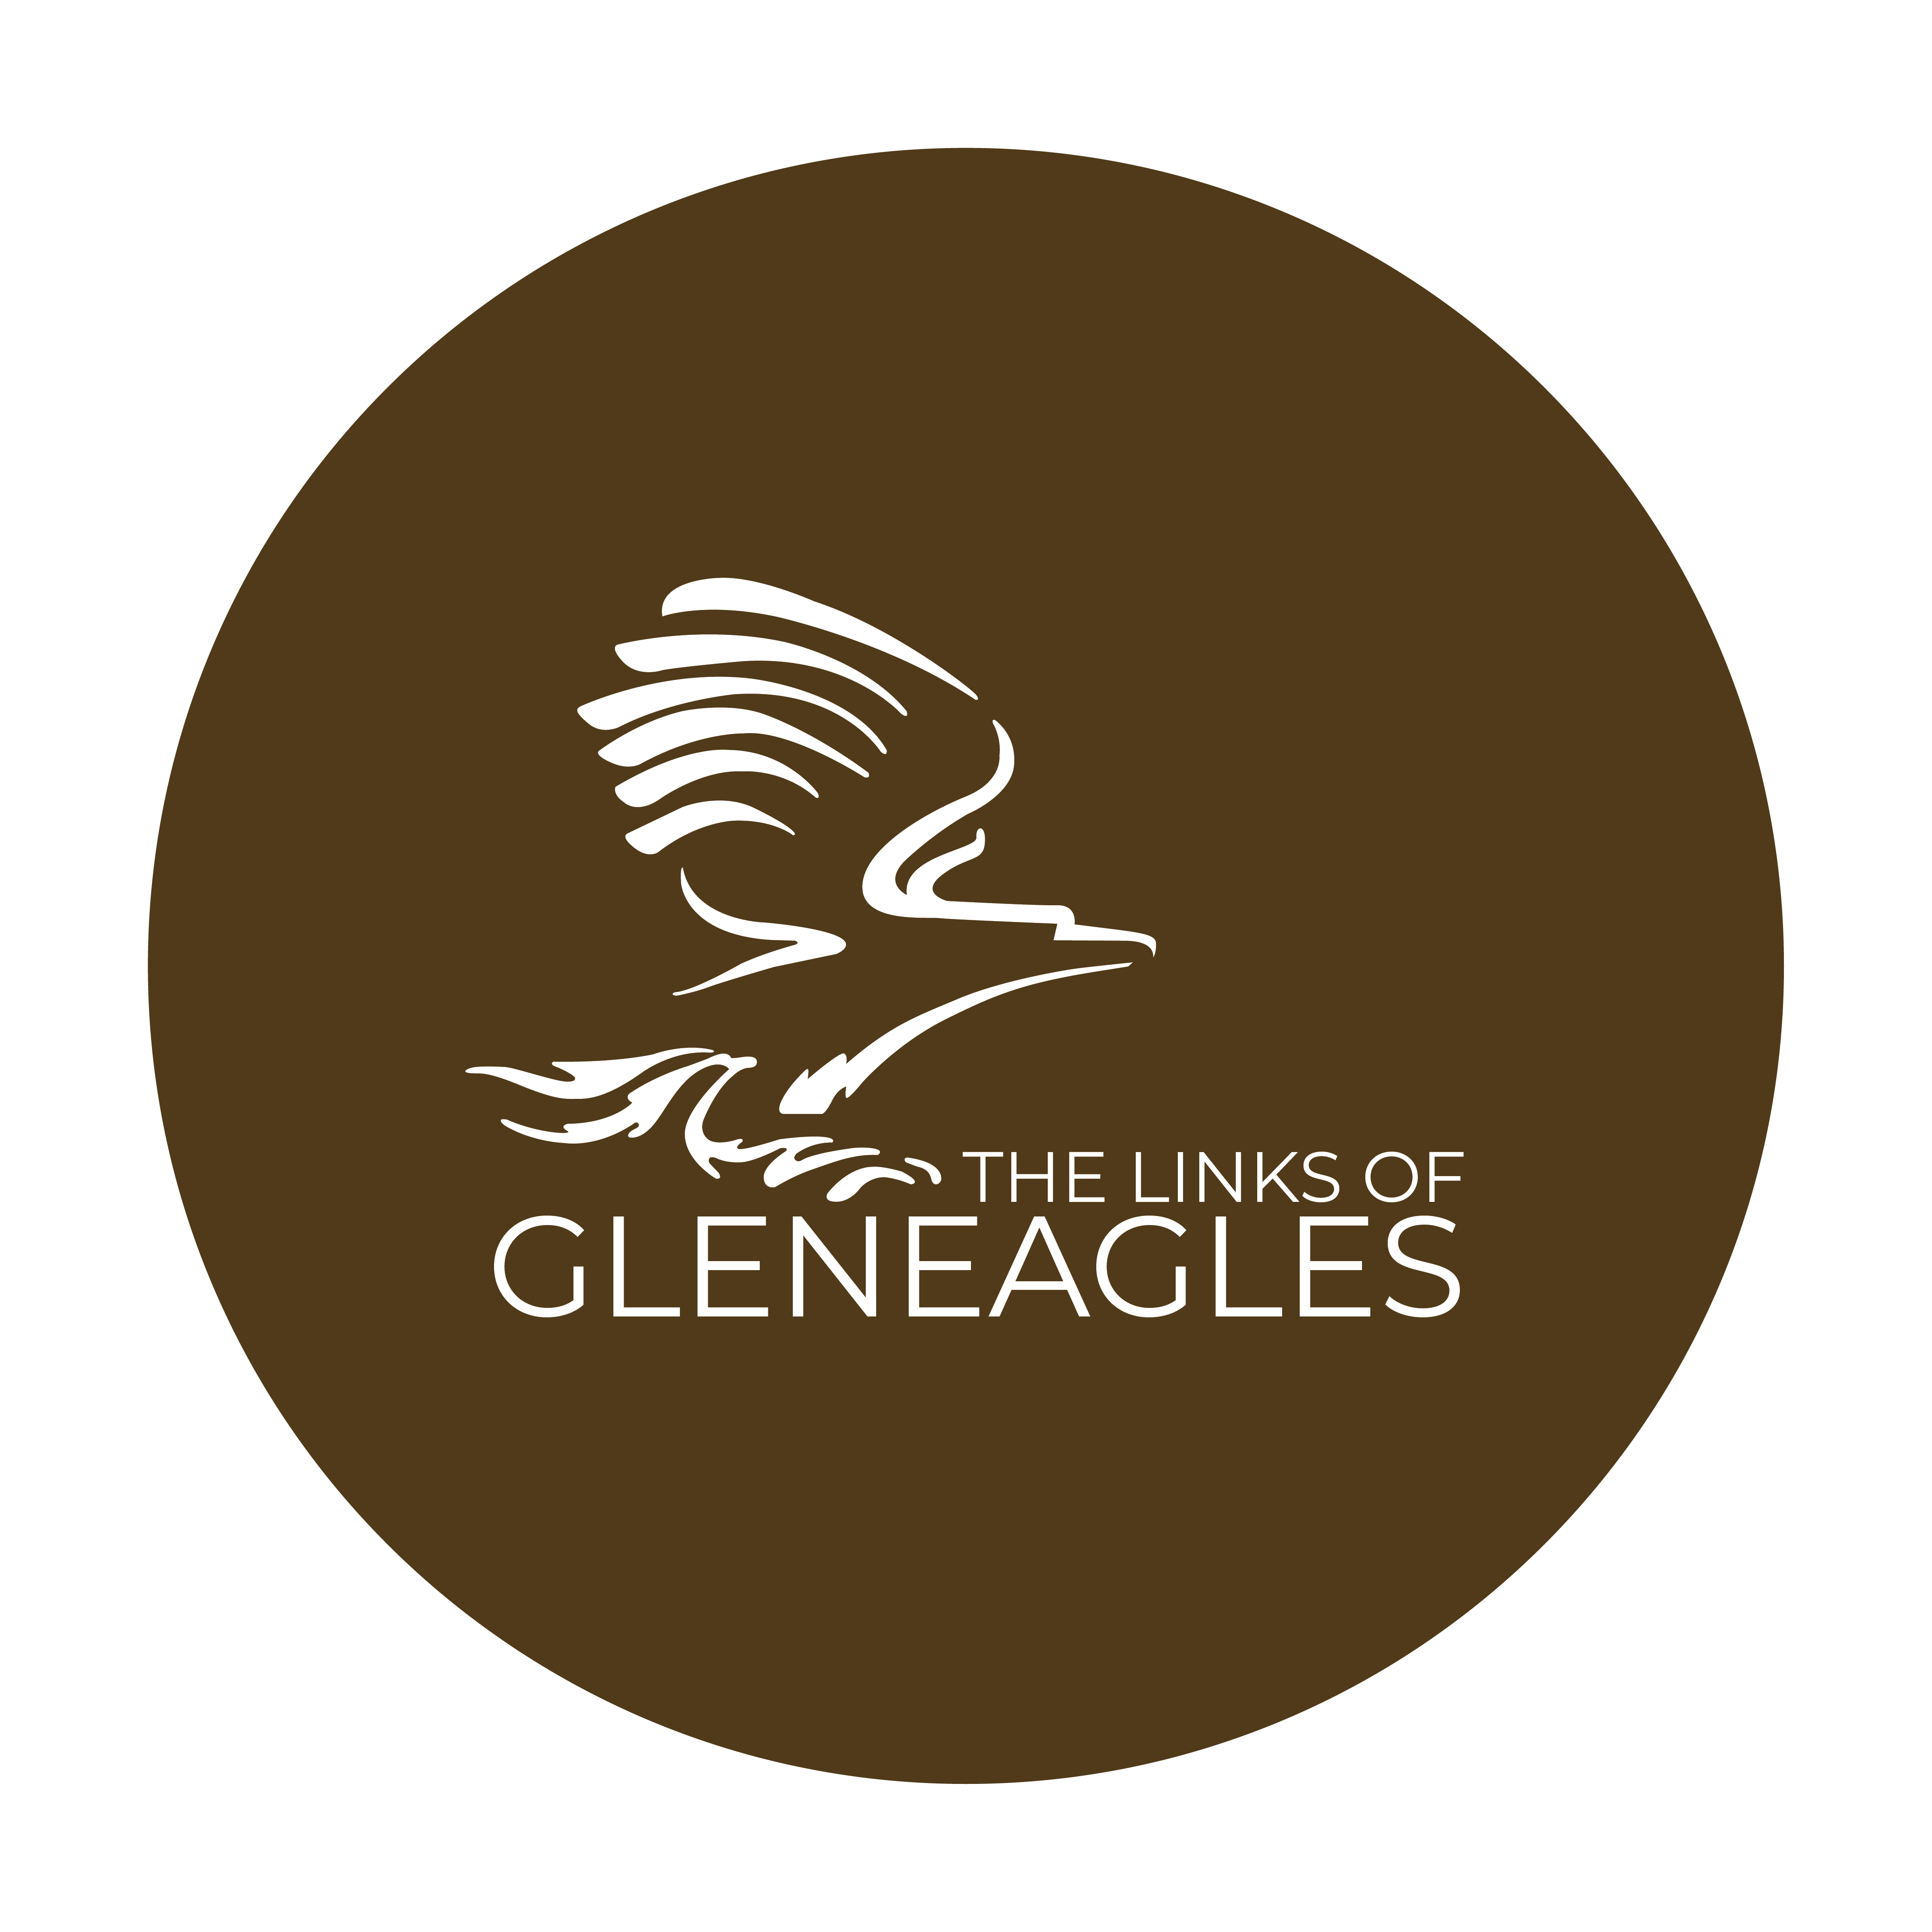 THE LINKS OF GLENEAGLES